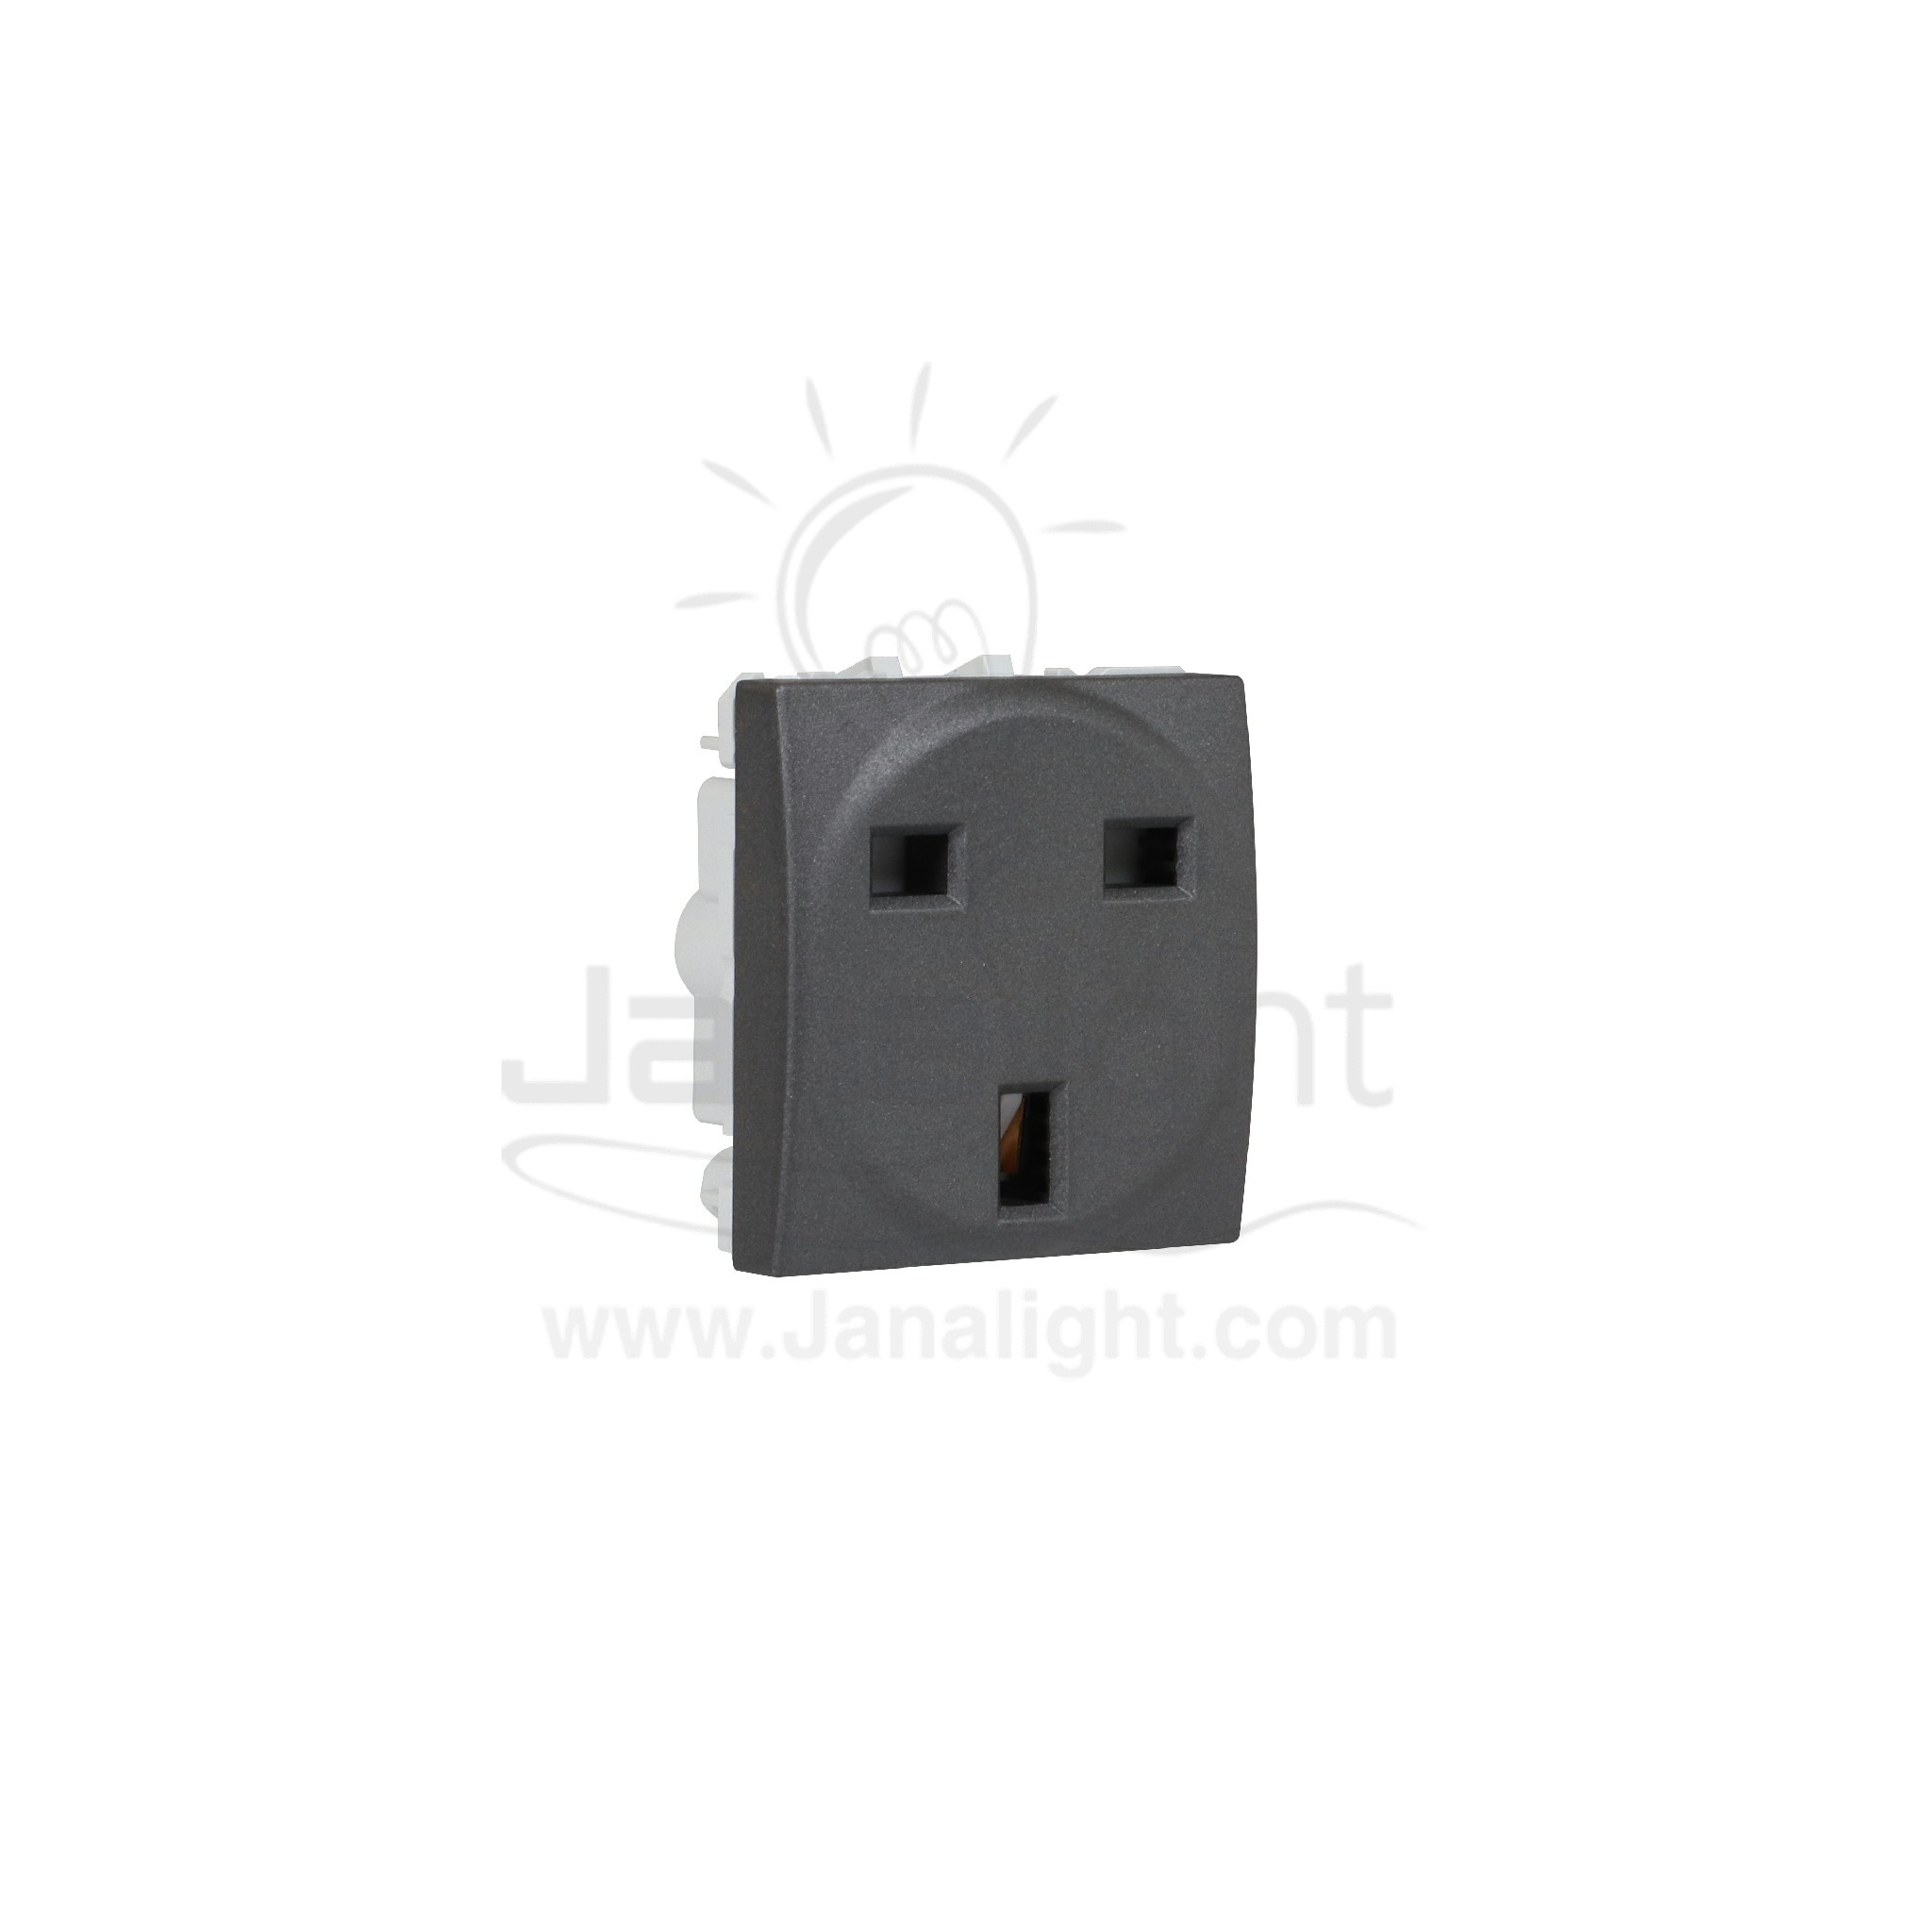 بريزة ثلاثية انكليزي MK رمادي شنايدر MGU3-045-12 Schneider Electric mgu3.045.12 Base Plug English